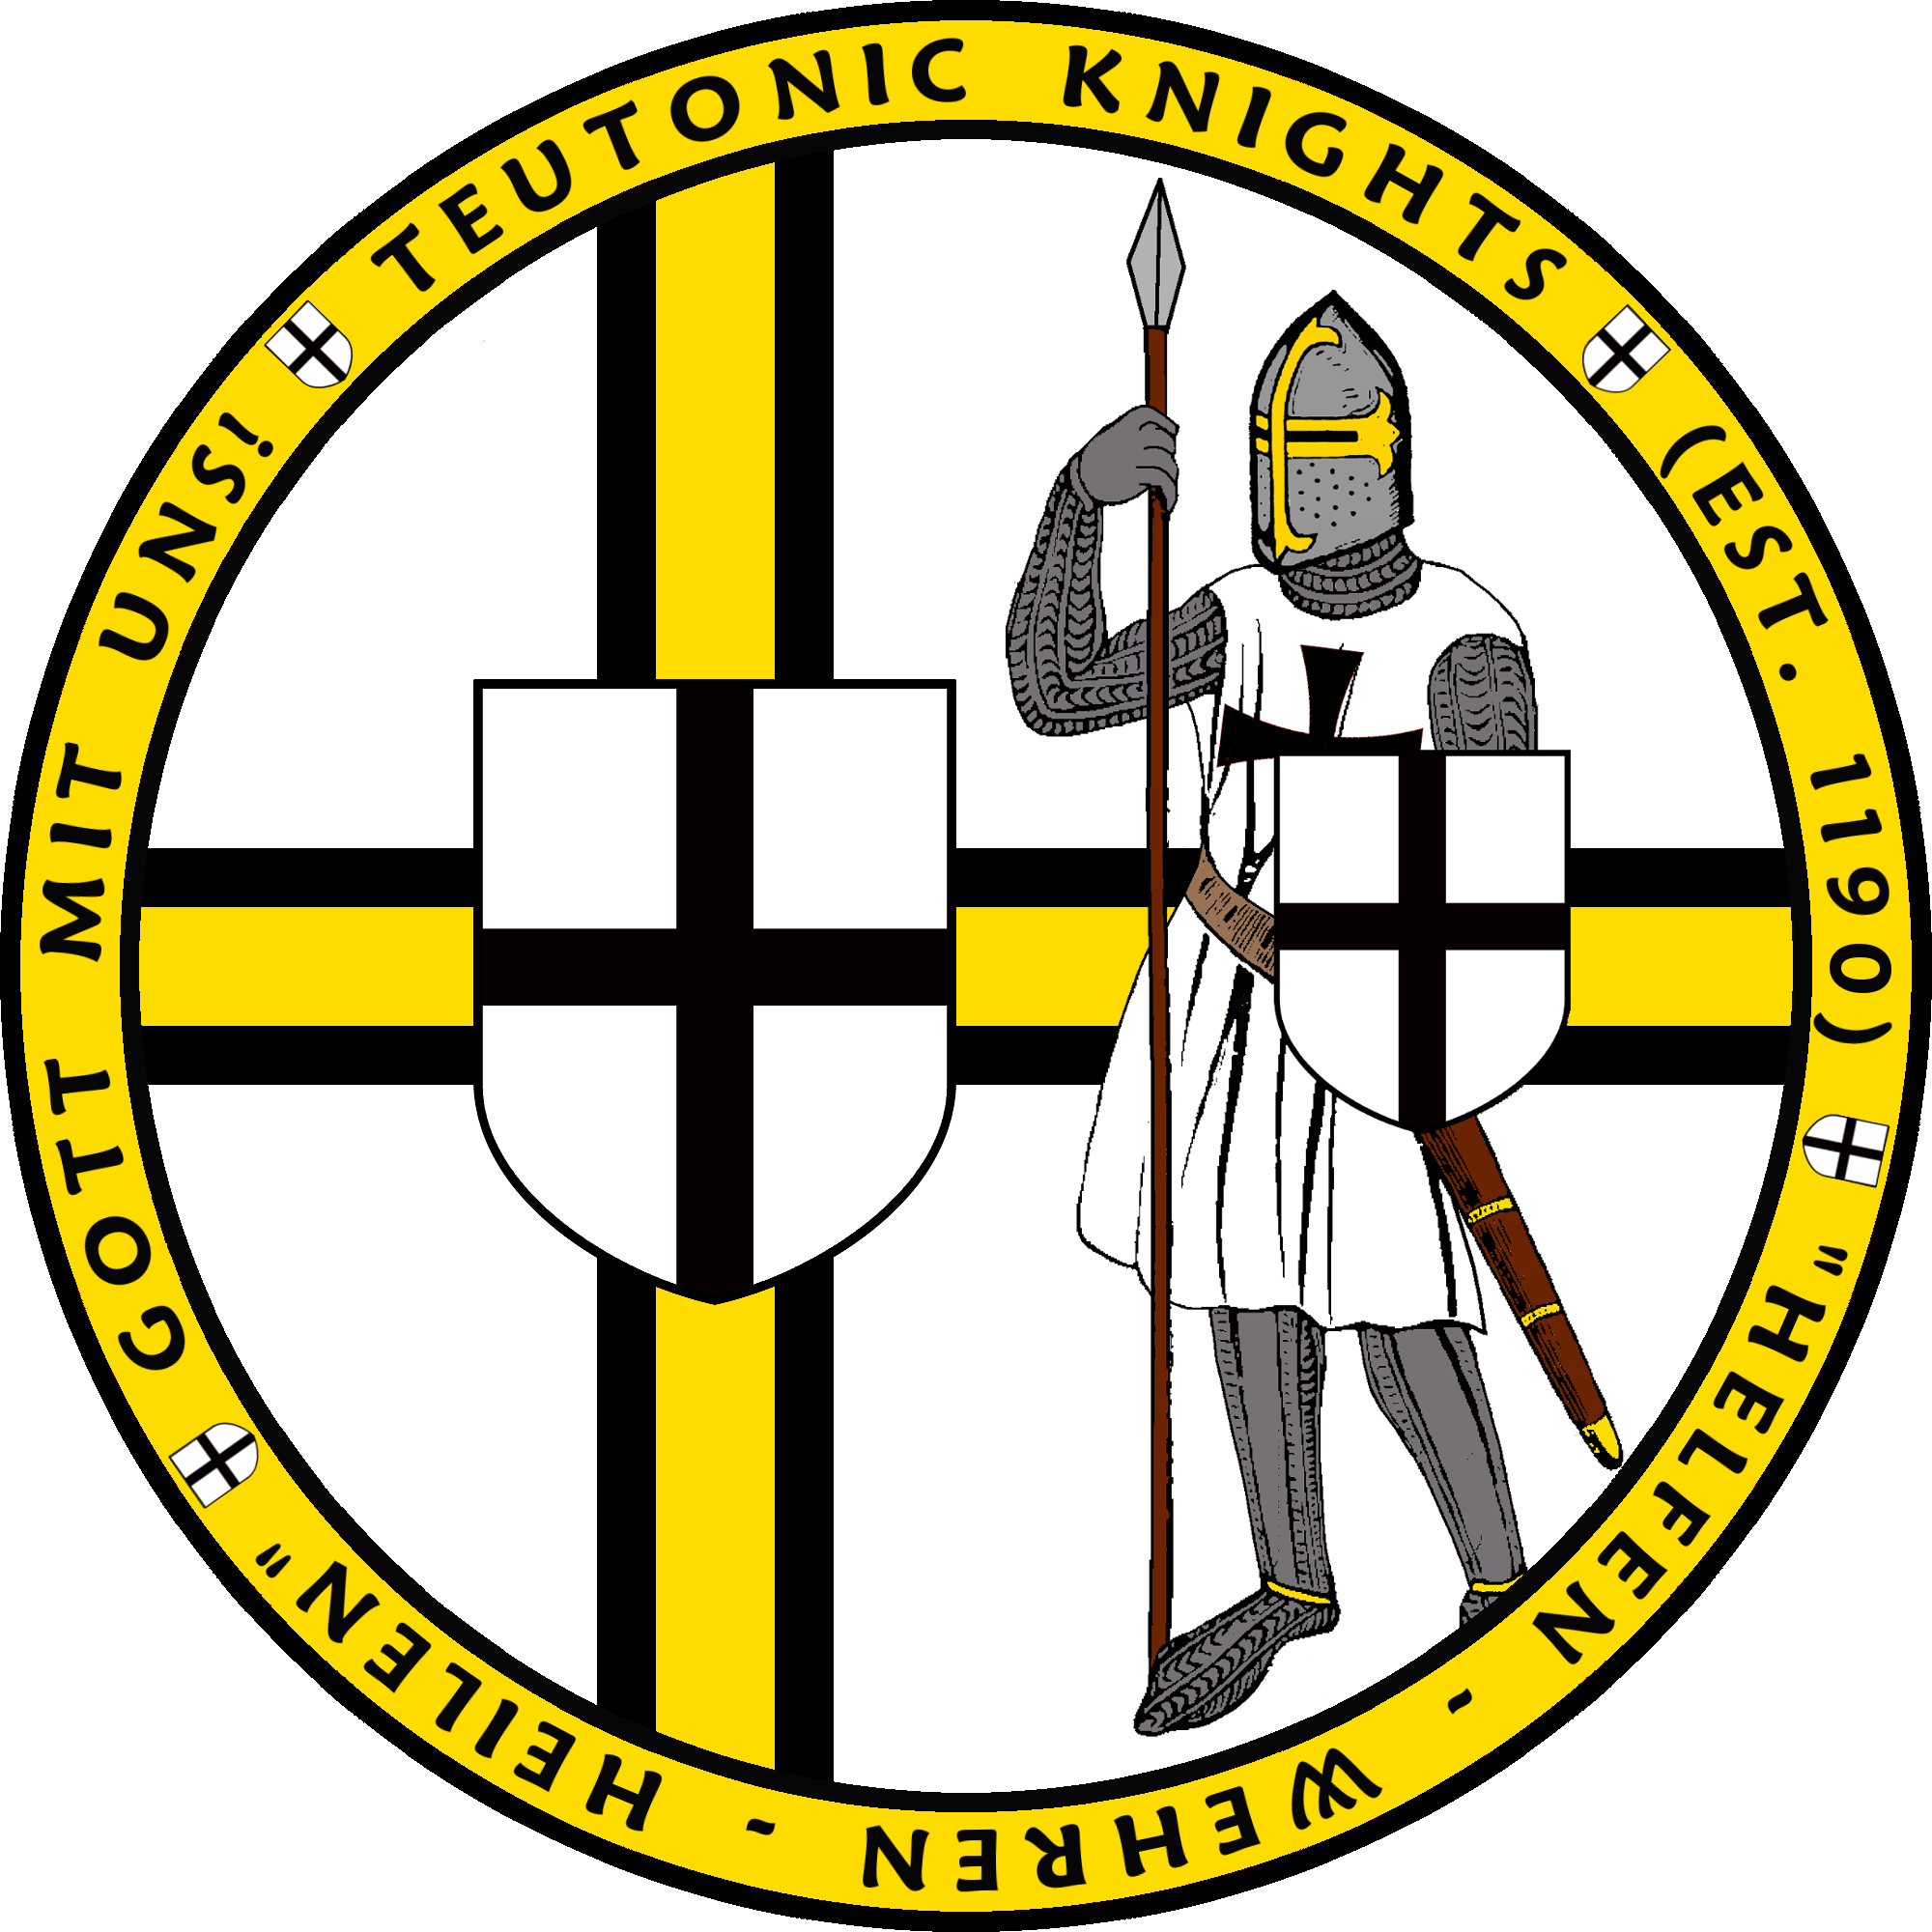 Teutonic Order (2000x2000)